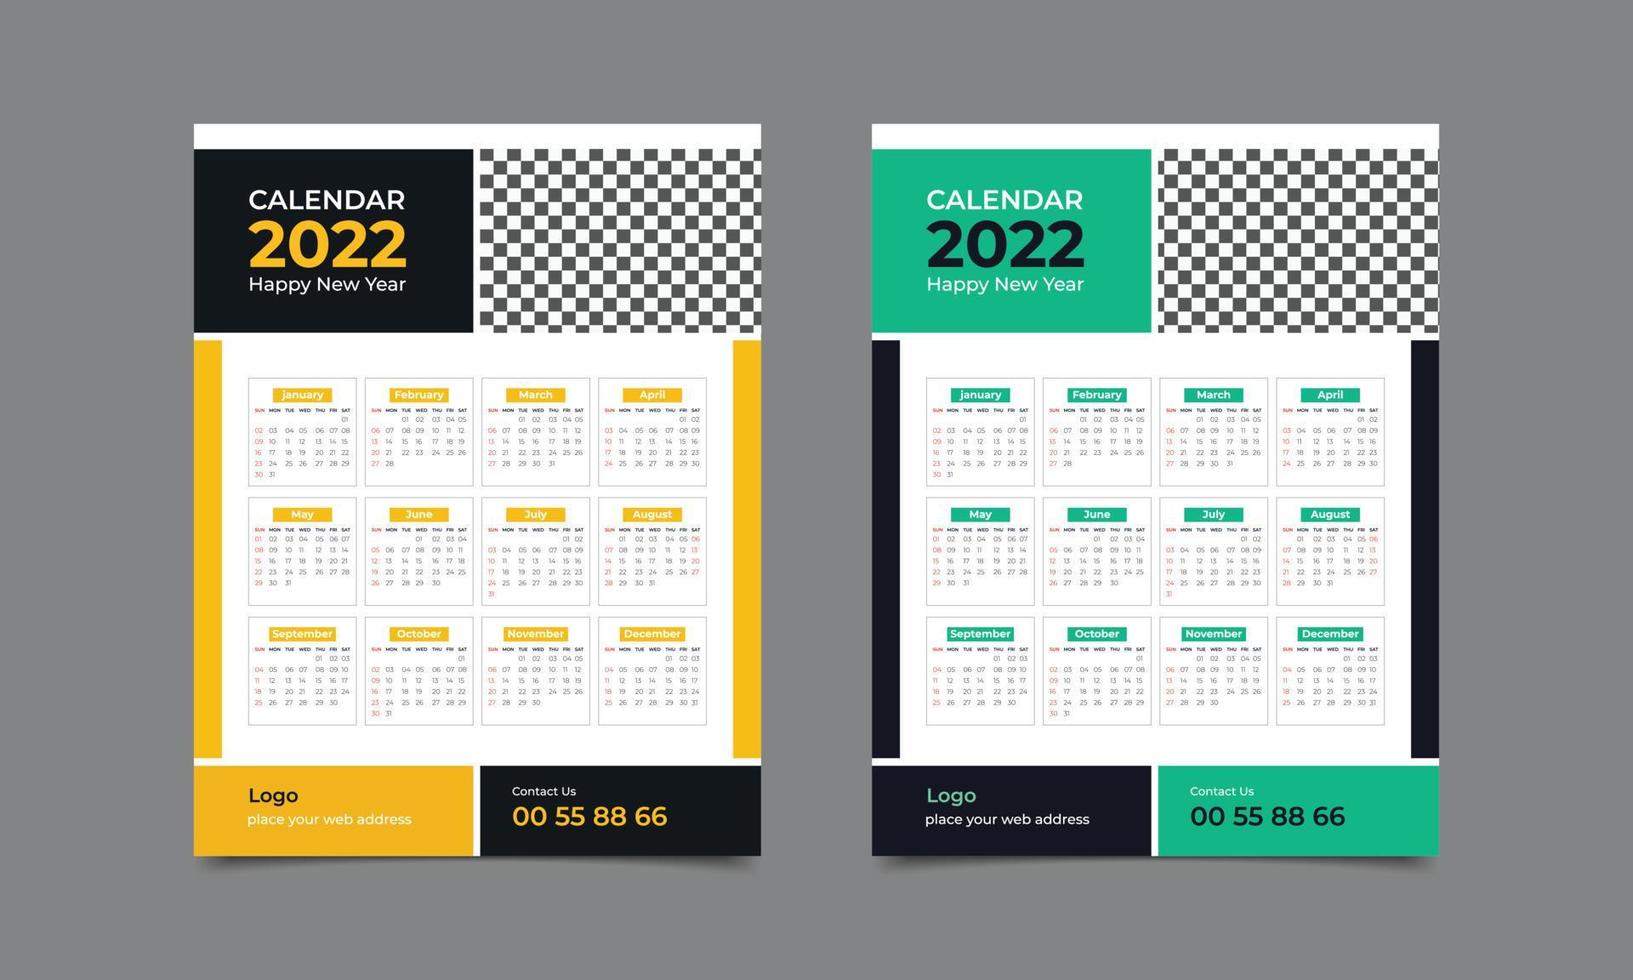 Happy new year wall calendar 2022 template design. vector illustration.